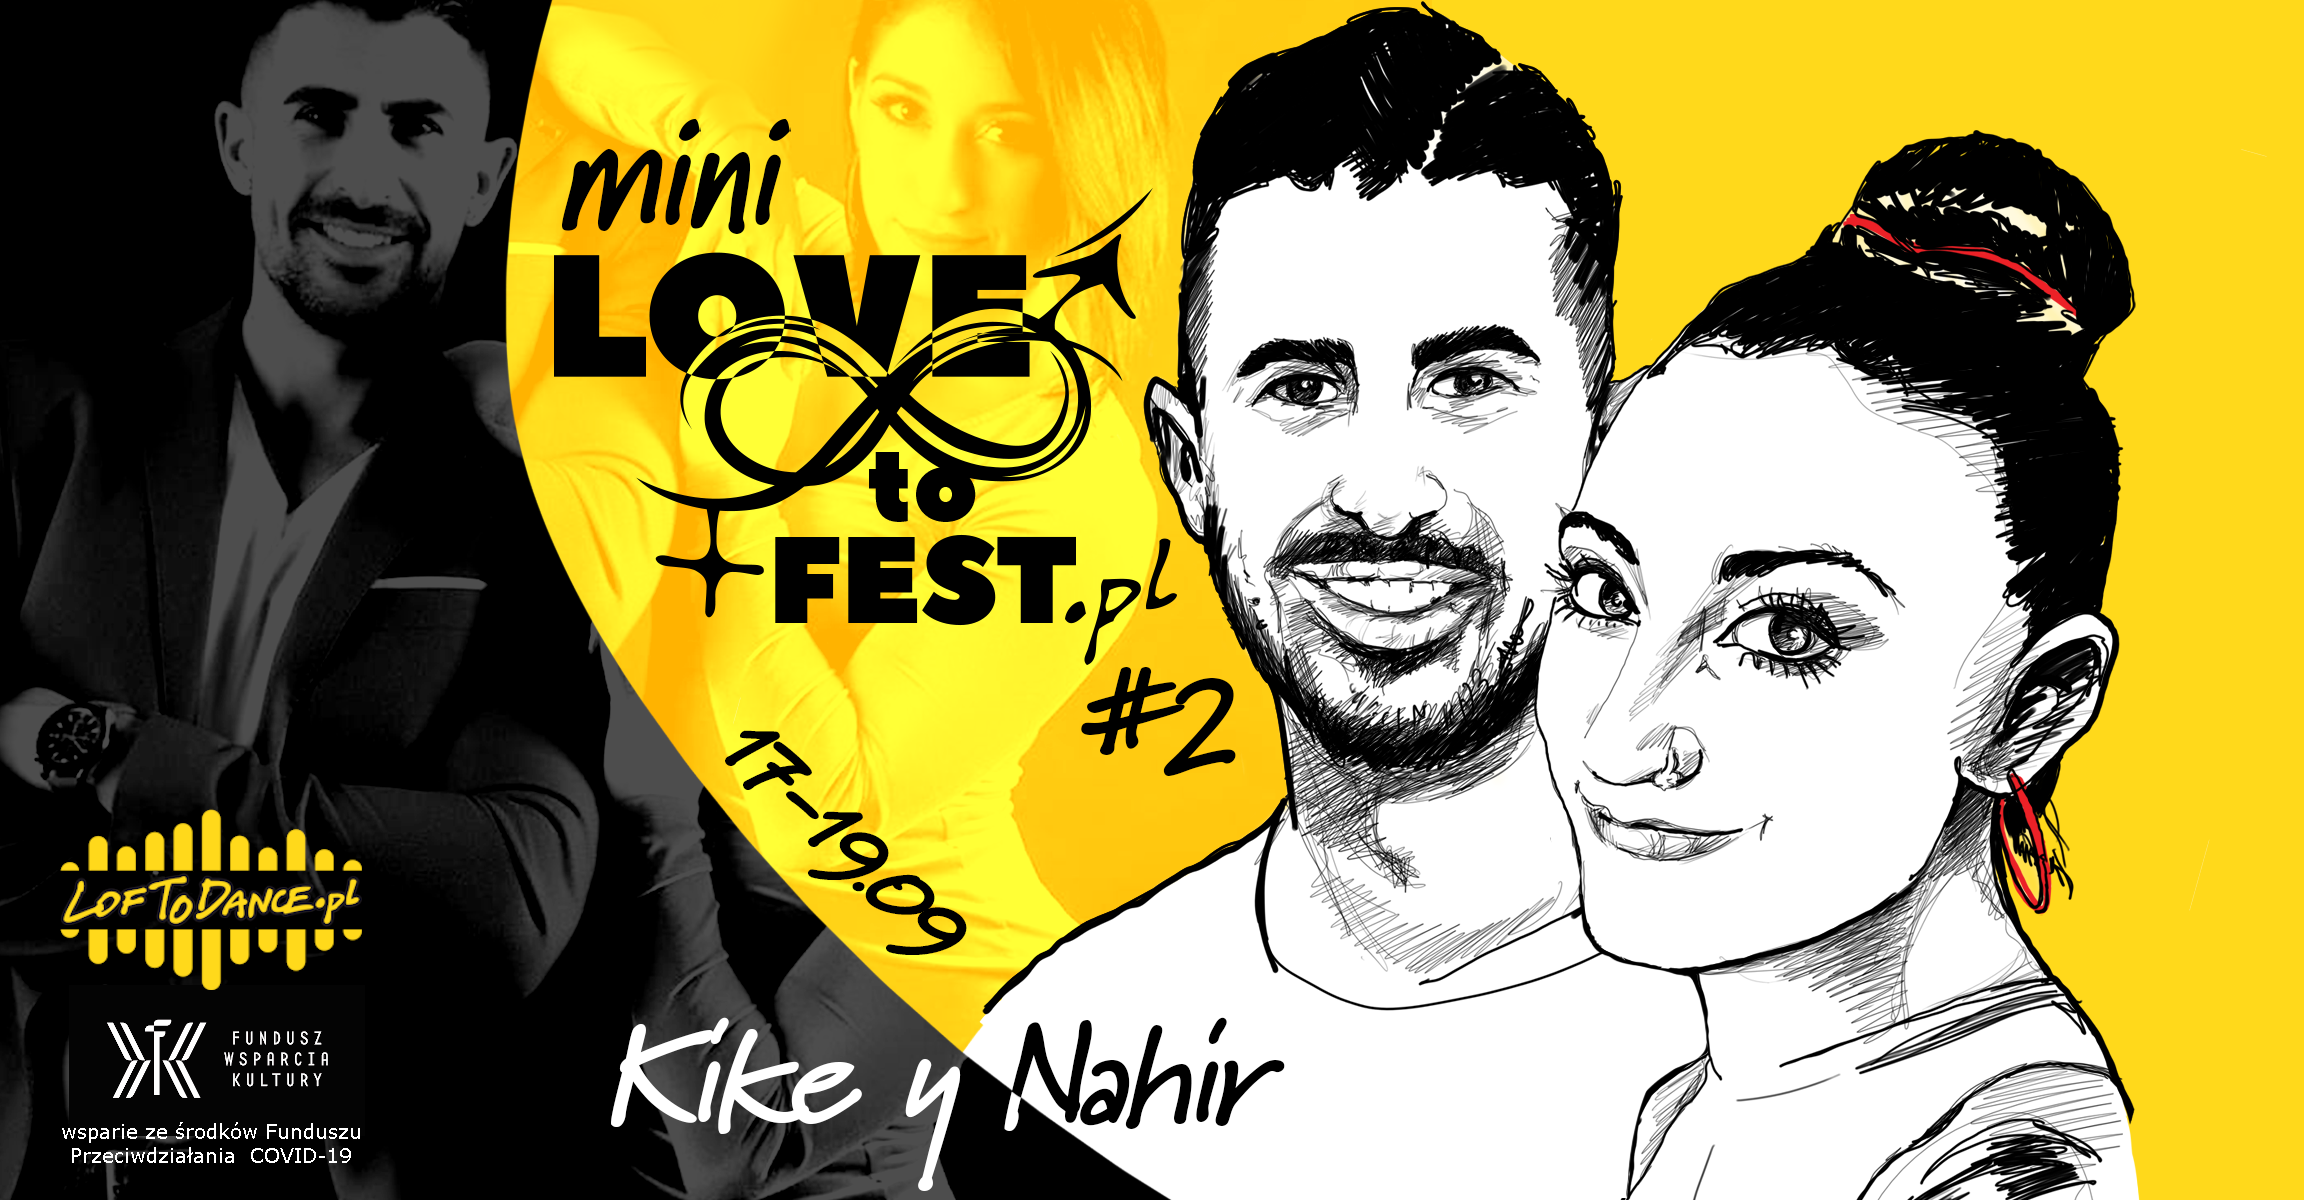 Mini LOVEtoFEST #2 with Kike y Nahir